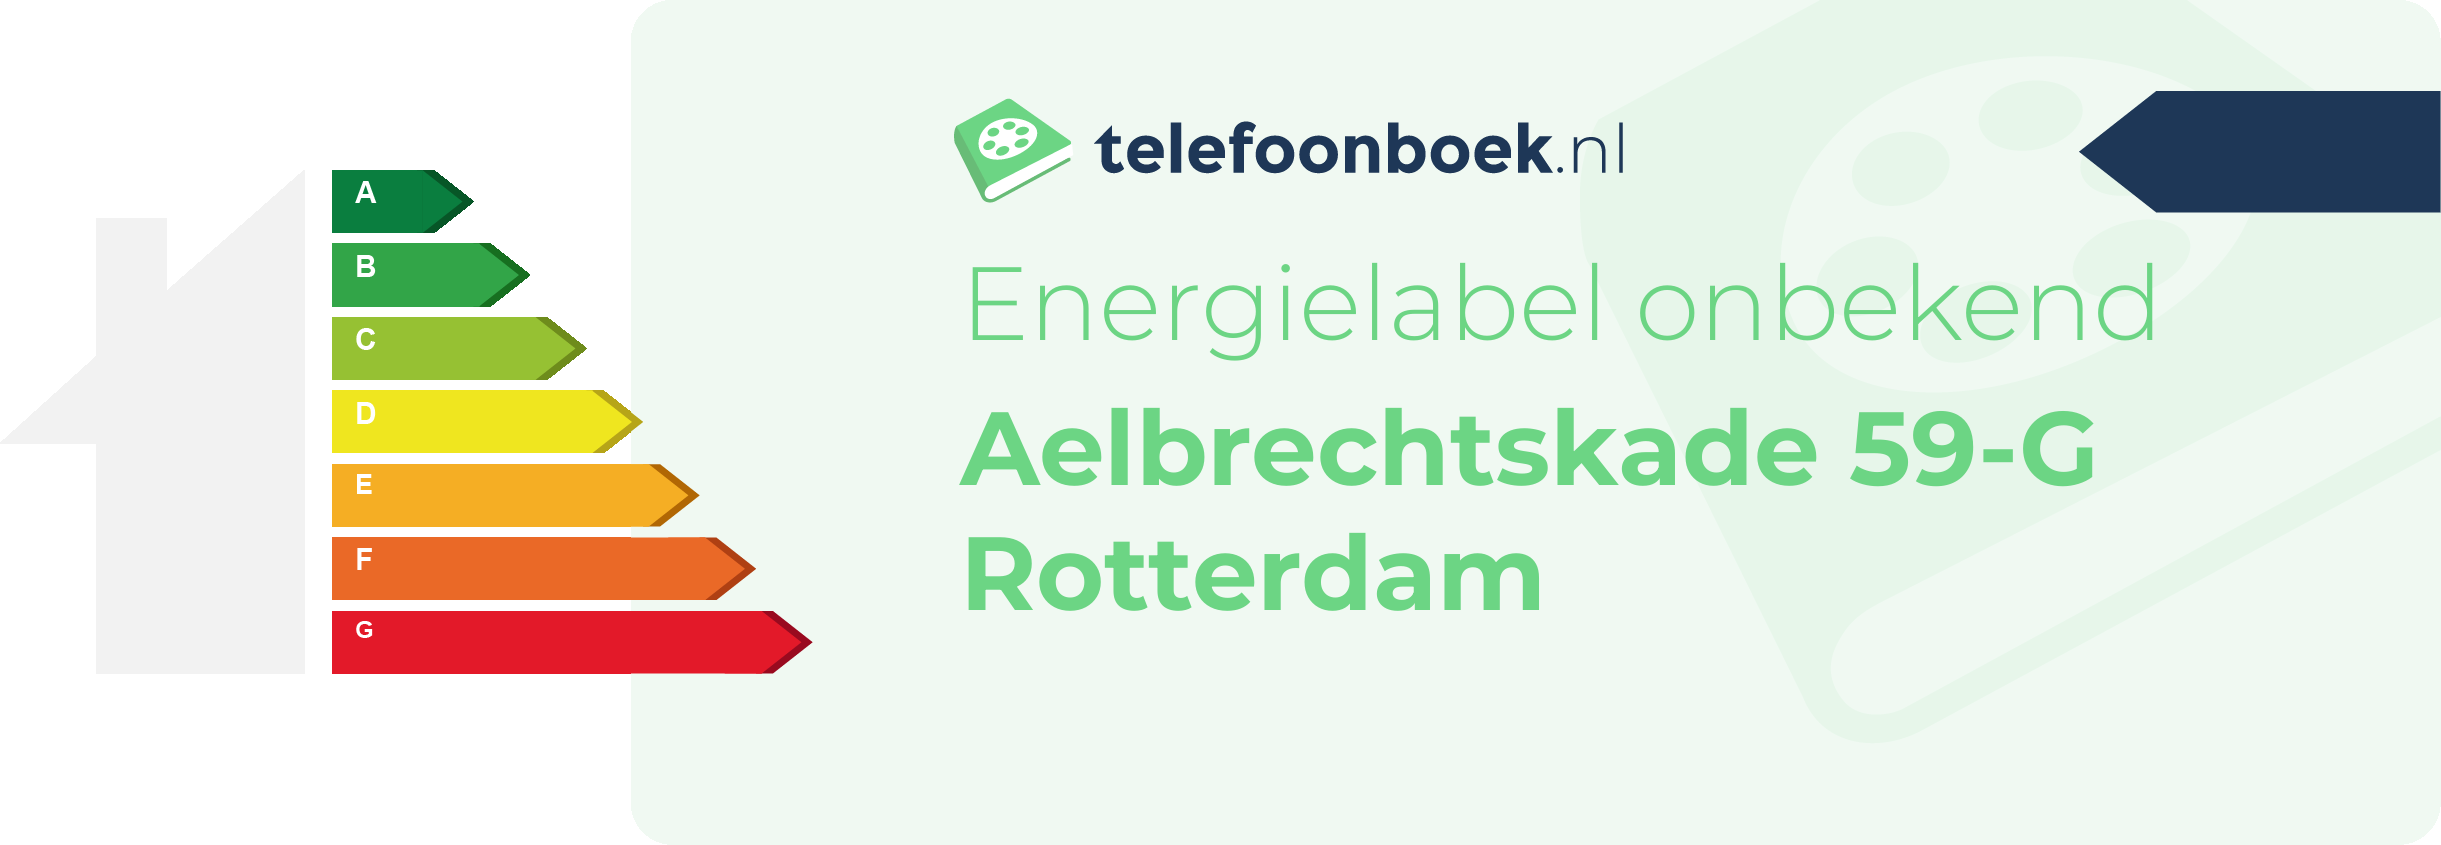 Energielabel Aelbrechtskade 59-G Rotterdam